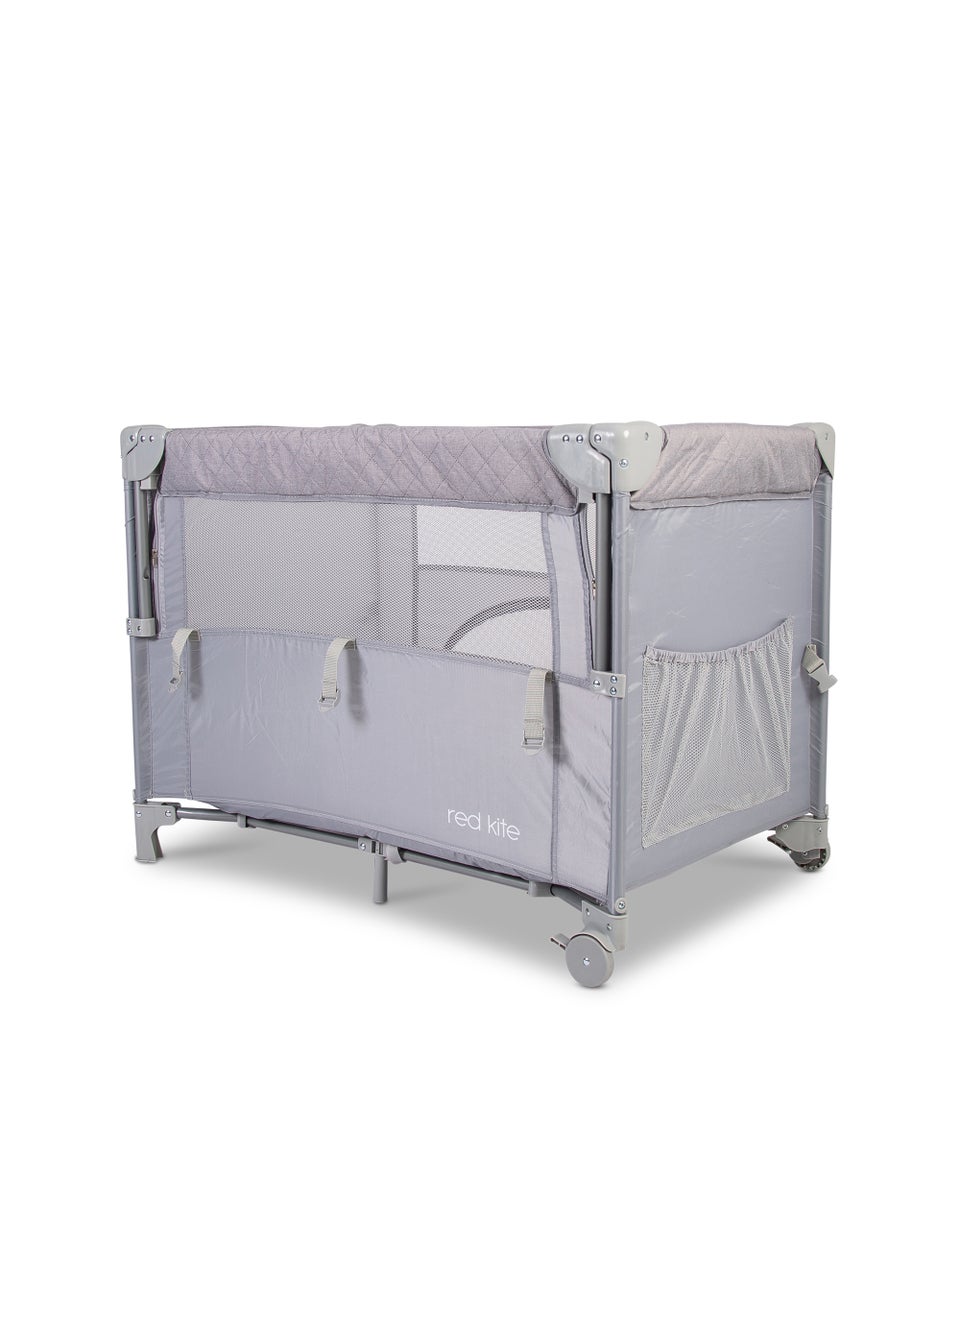 Red Kite Dreamer Bedside Travel Crib with Newborn Bassinet (69cm x 93cm x 66cm)